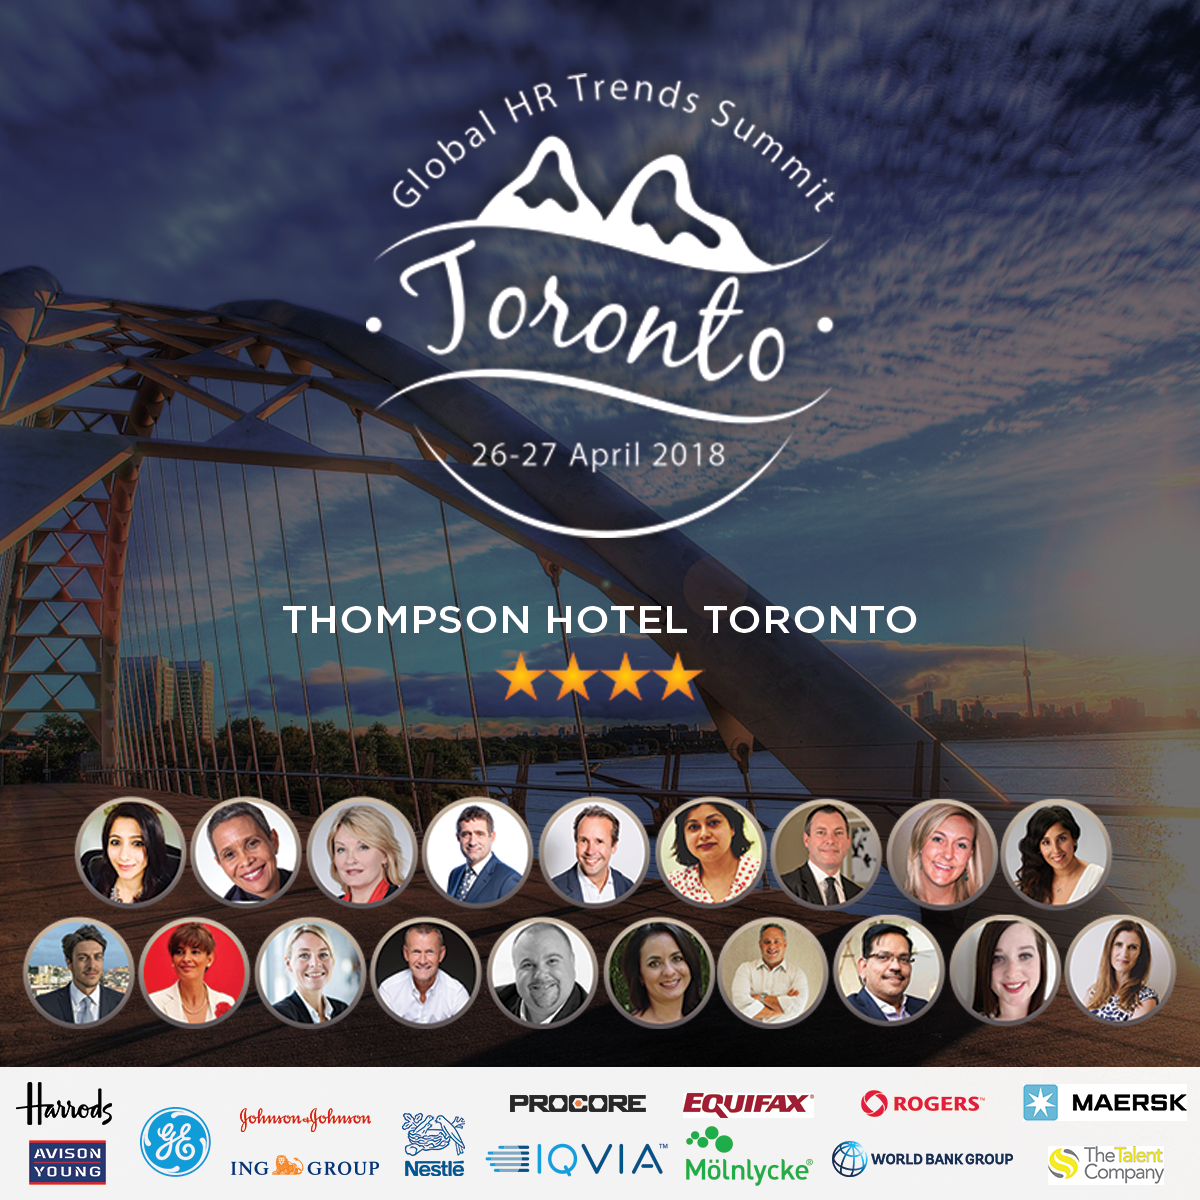 Global HR Trends Summit Toronto